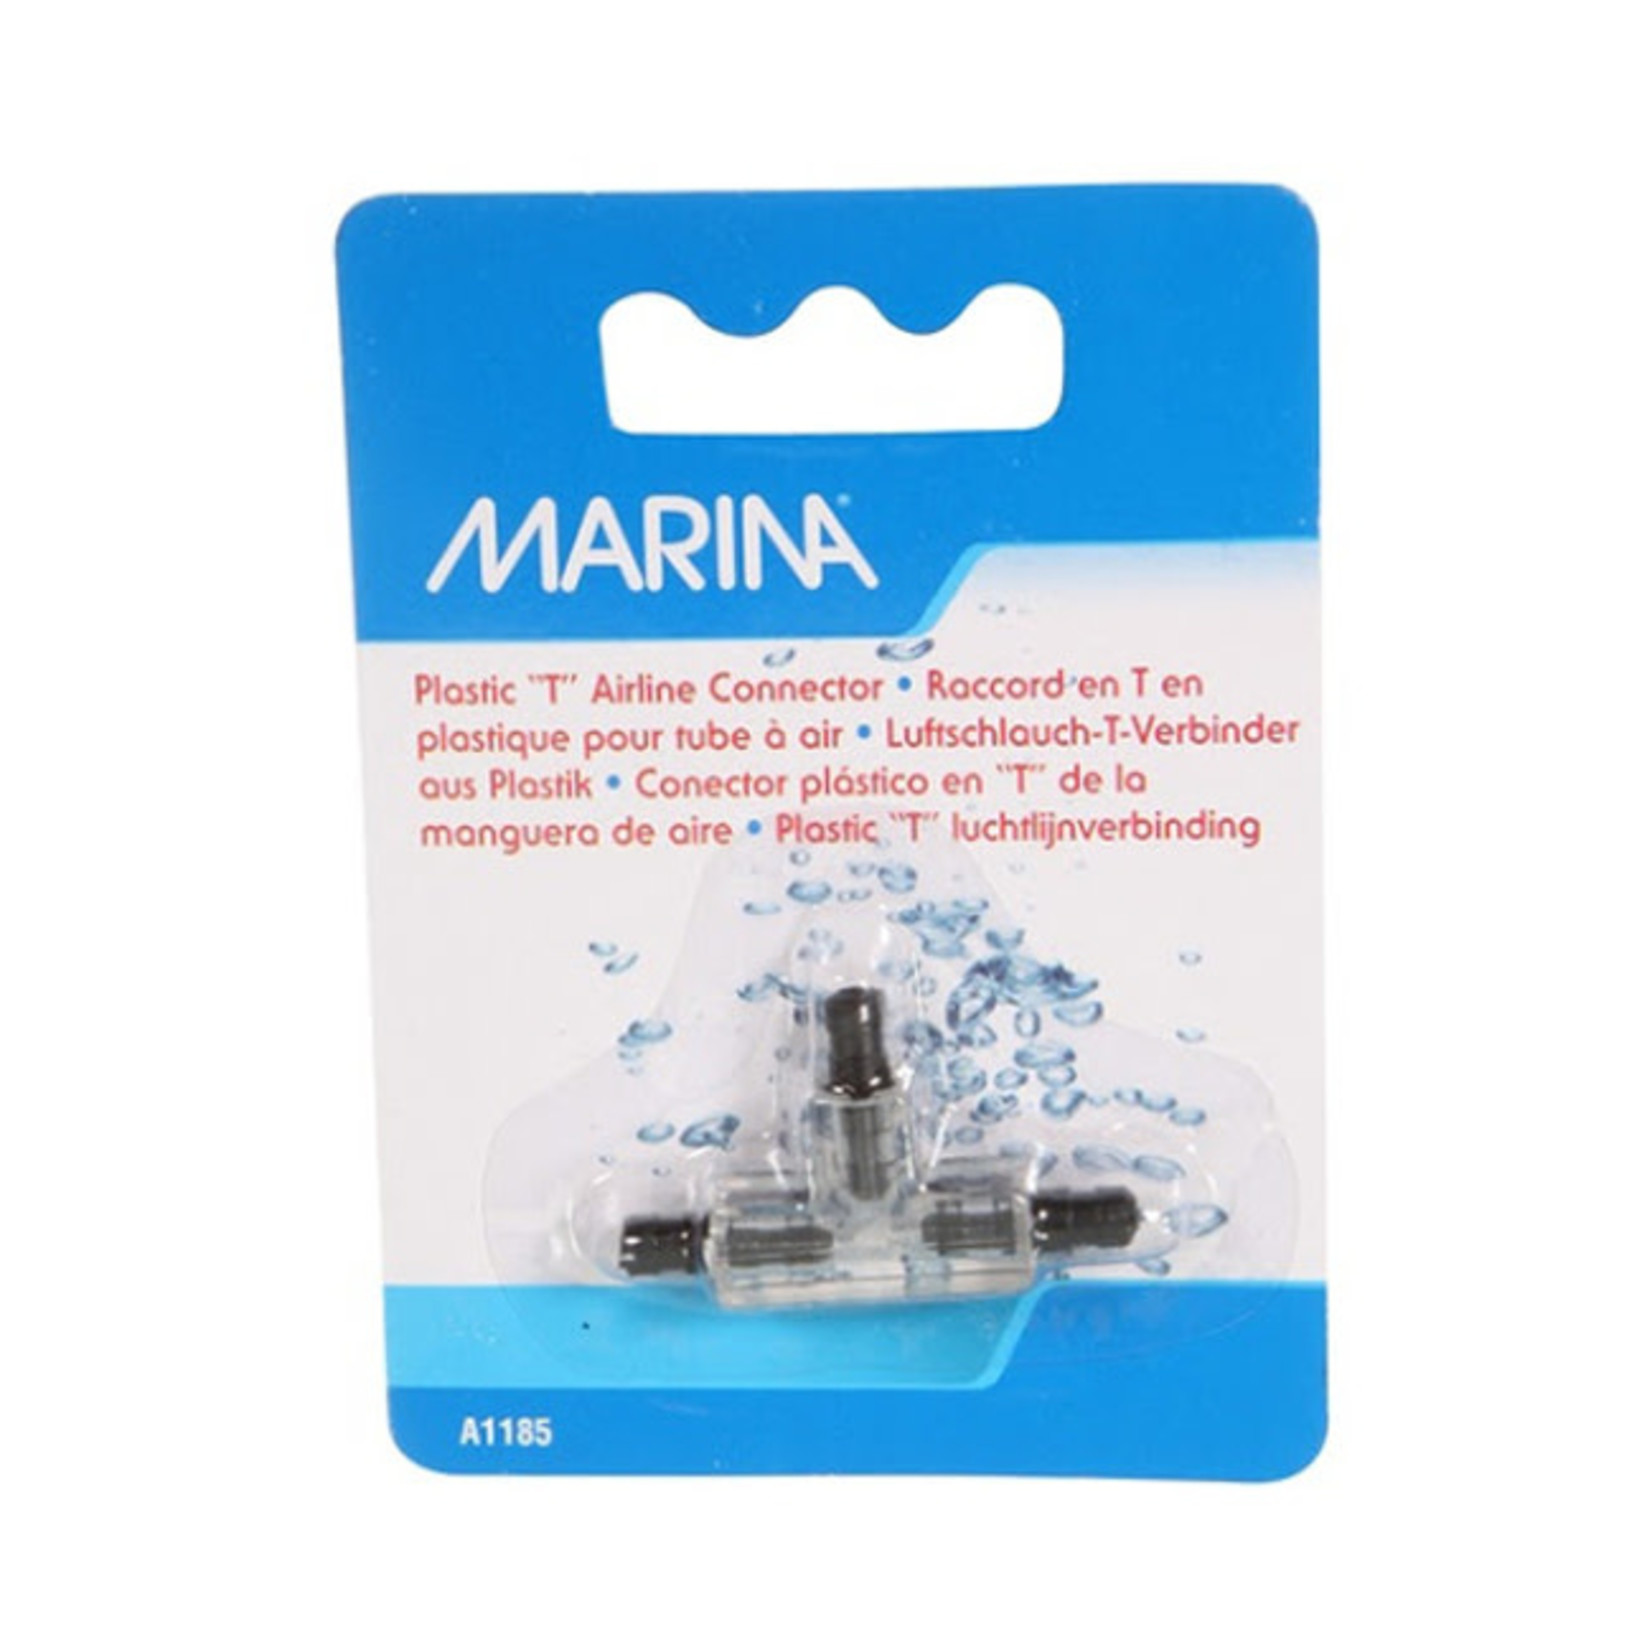 Marina Marina Plastic "T" Airline Connector